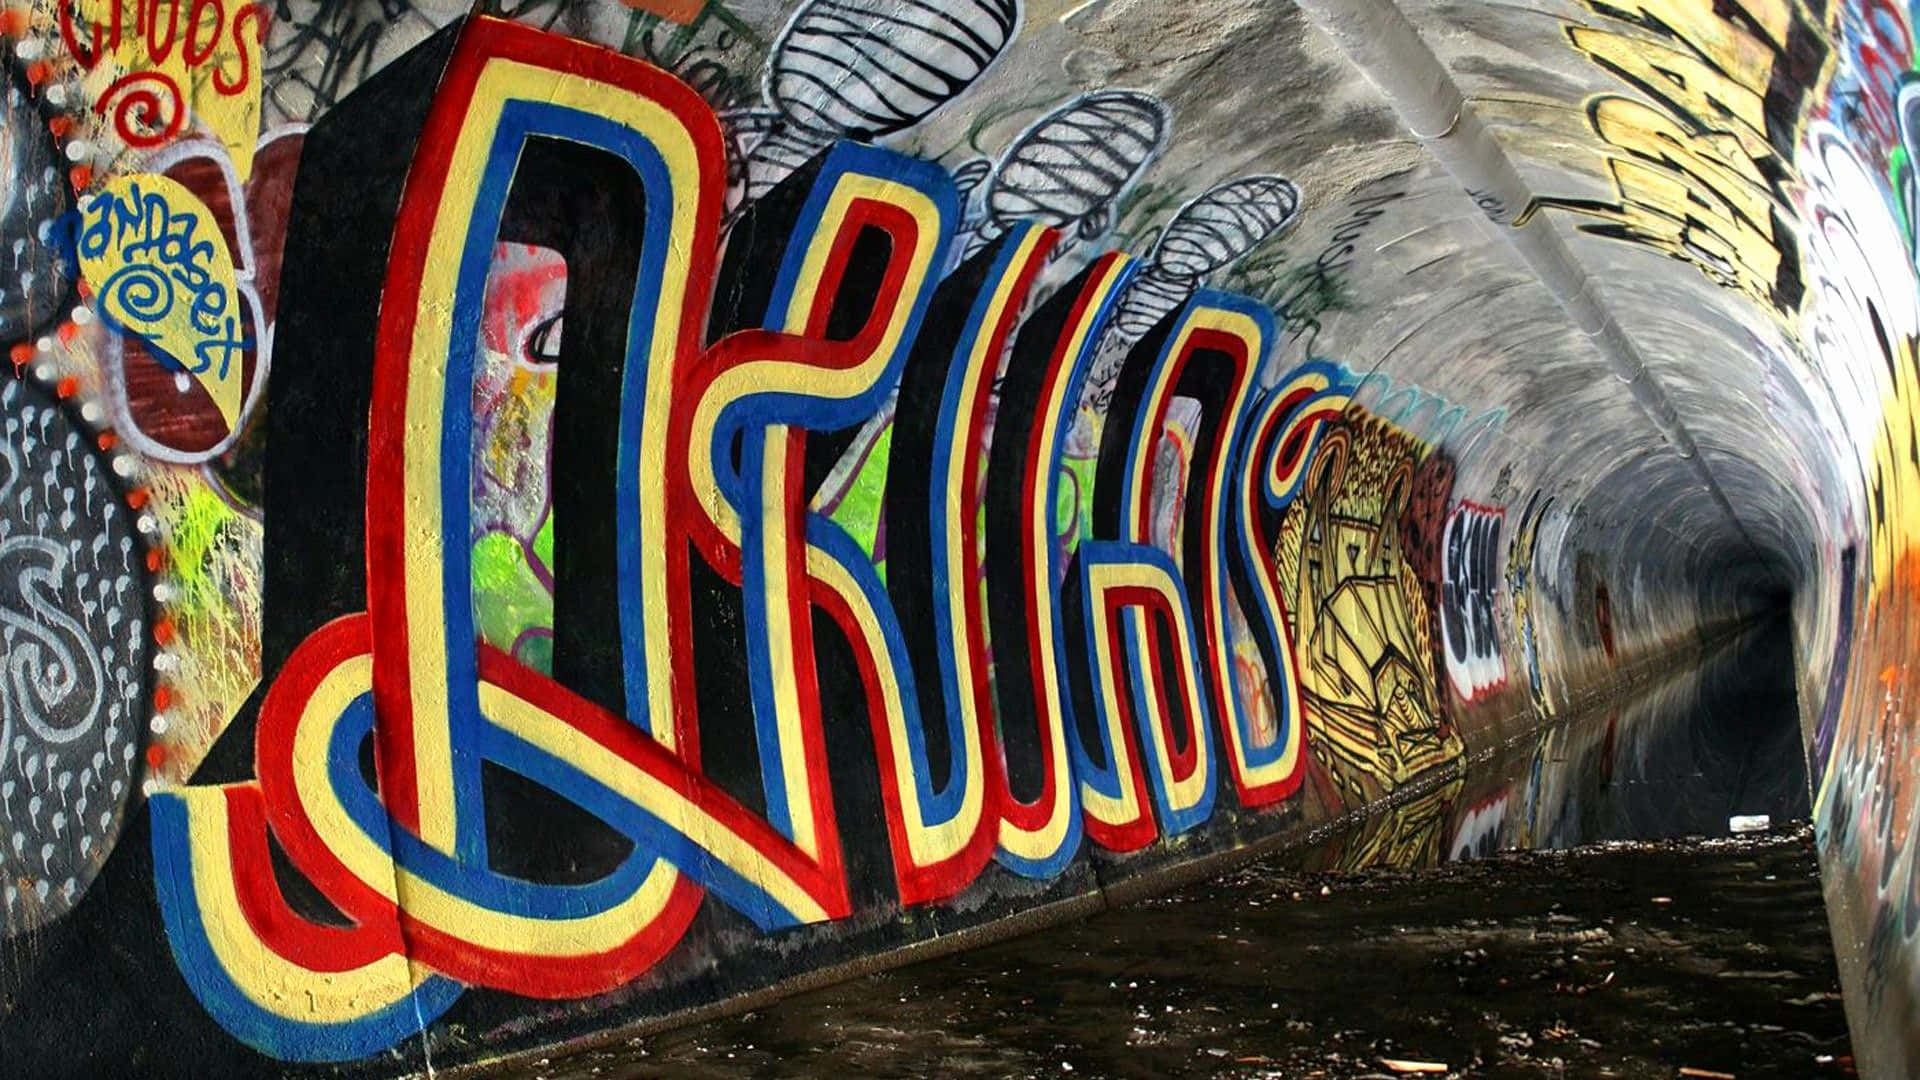 Graffiti Desktop Wallpaper